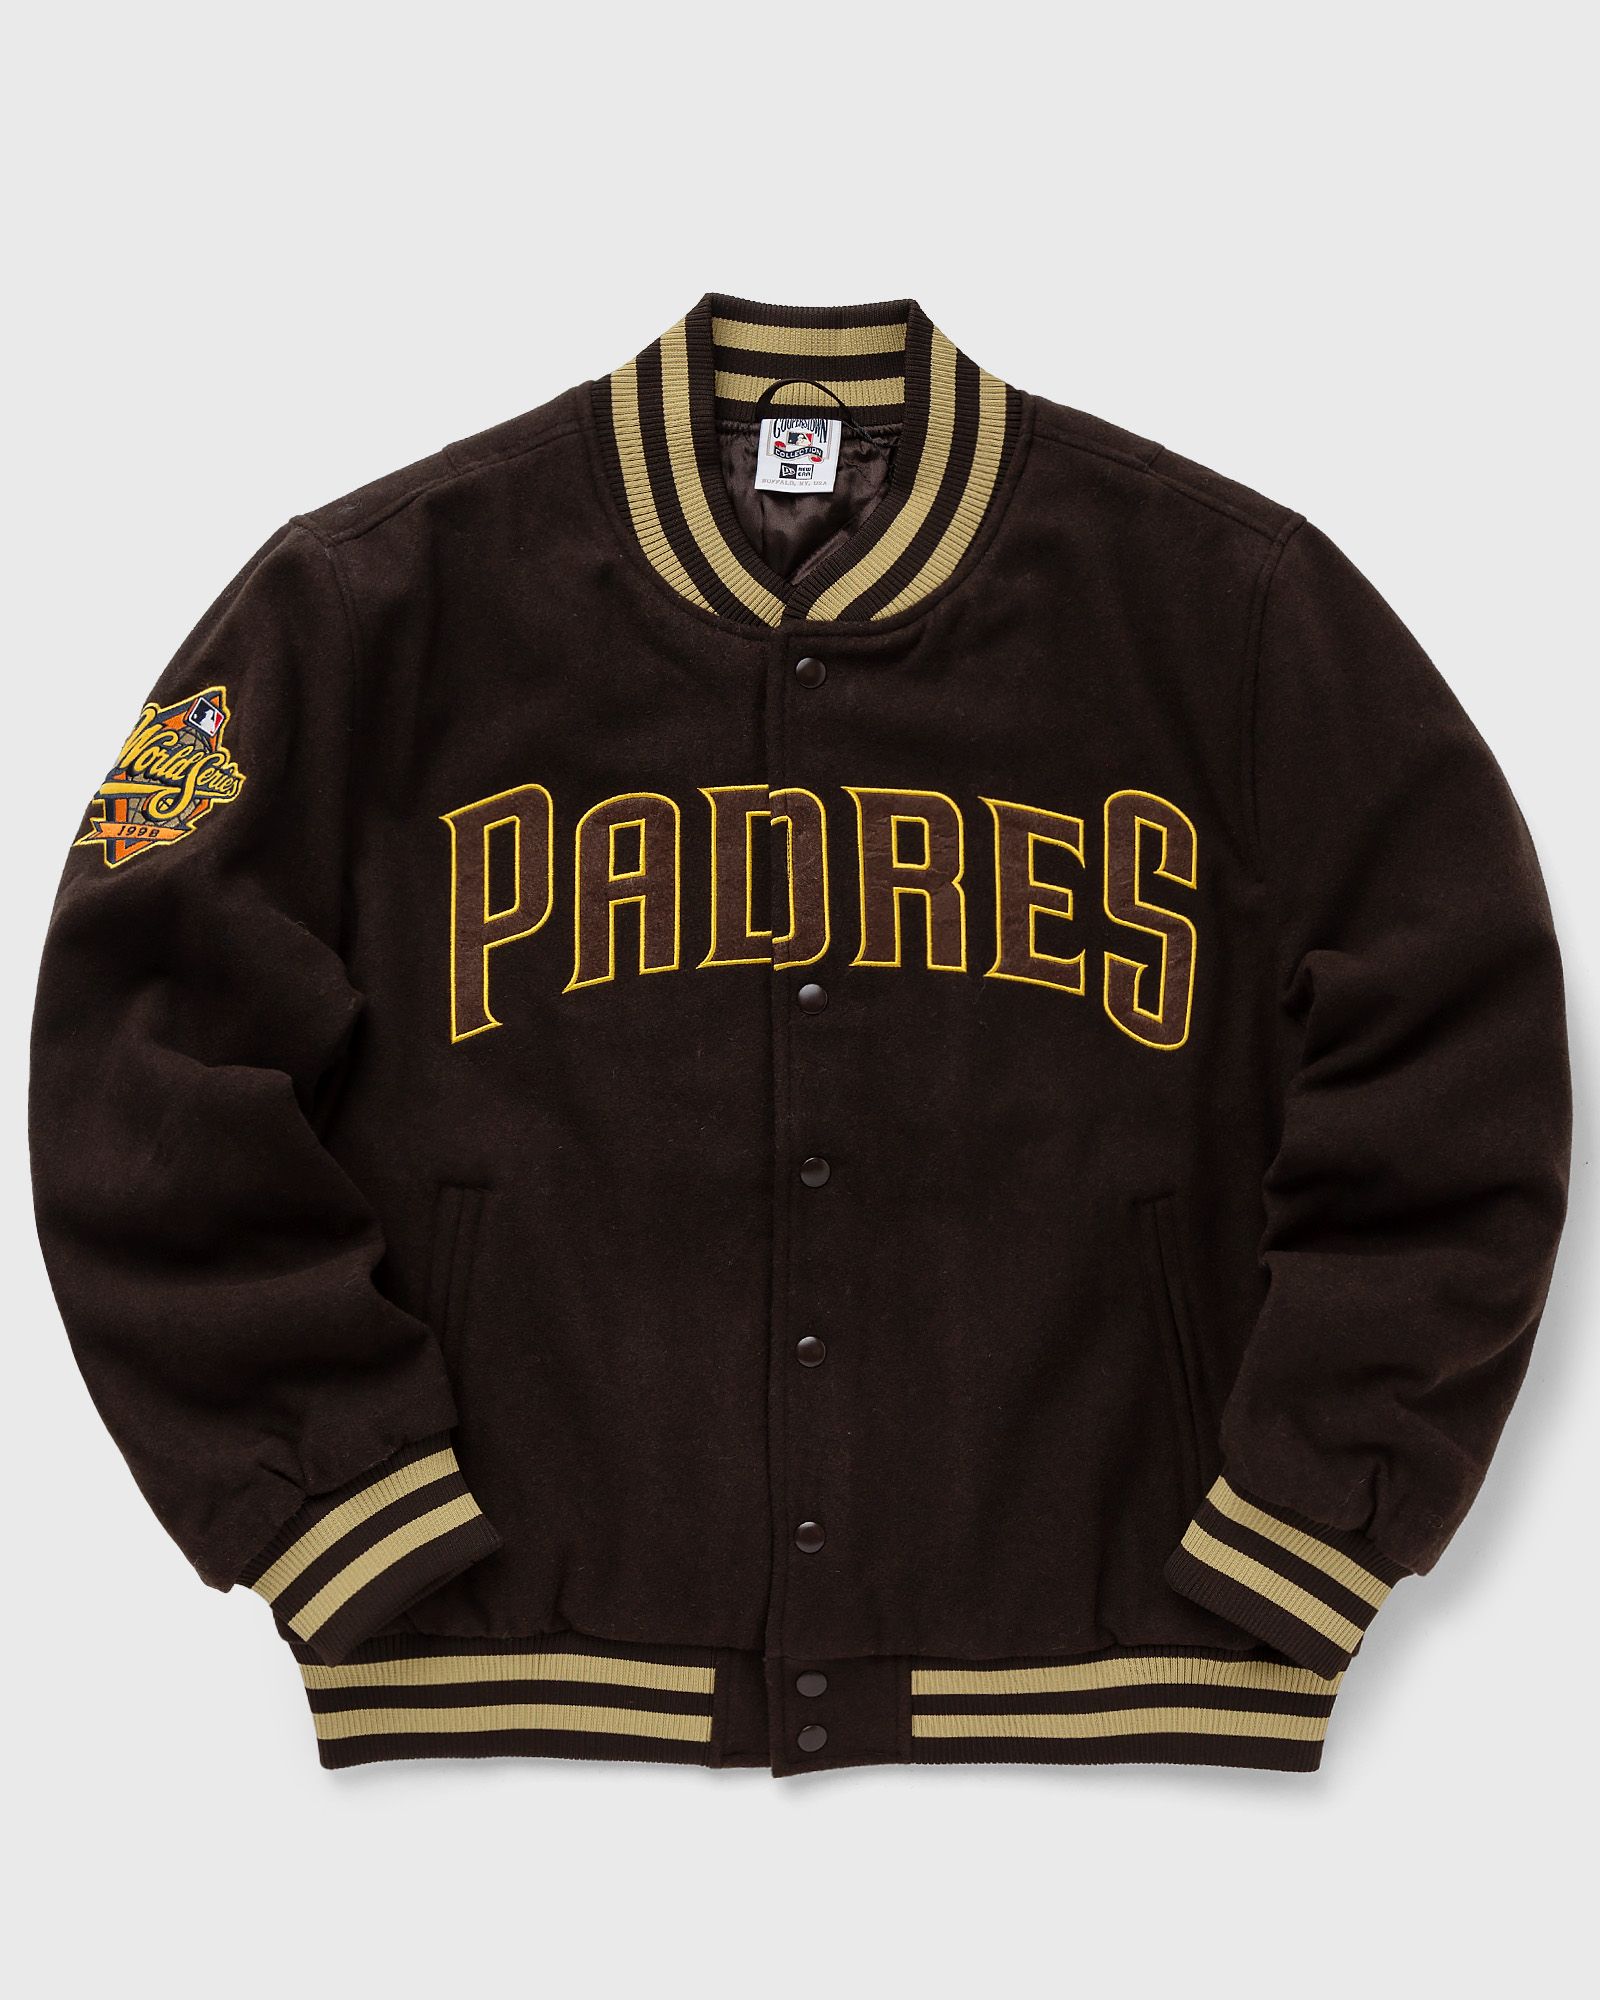 New Era - mlb patch varsity jacket san diego padres men bomber jackets|college jackets brown in größe:l